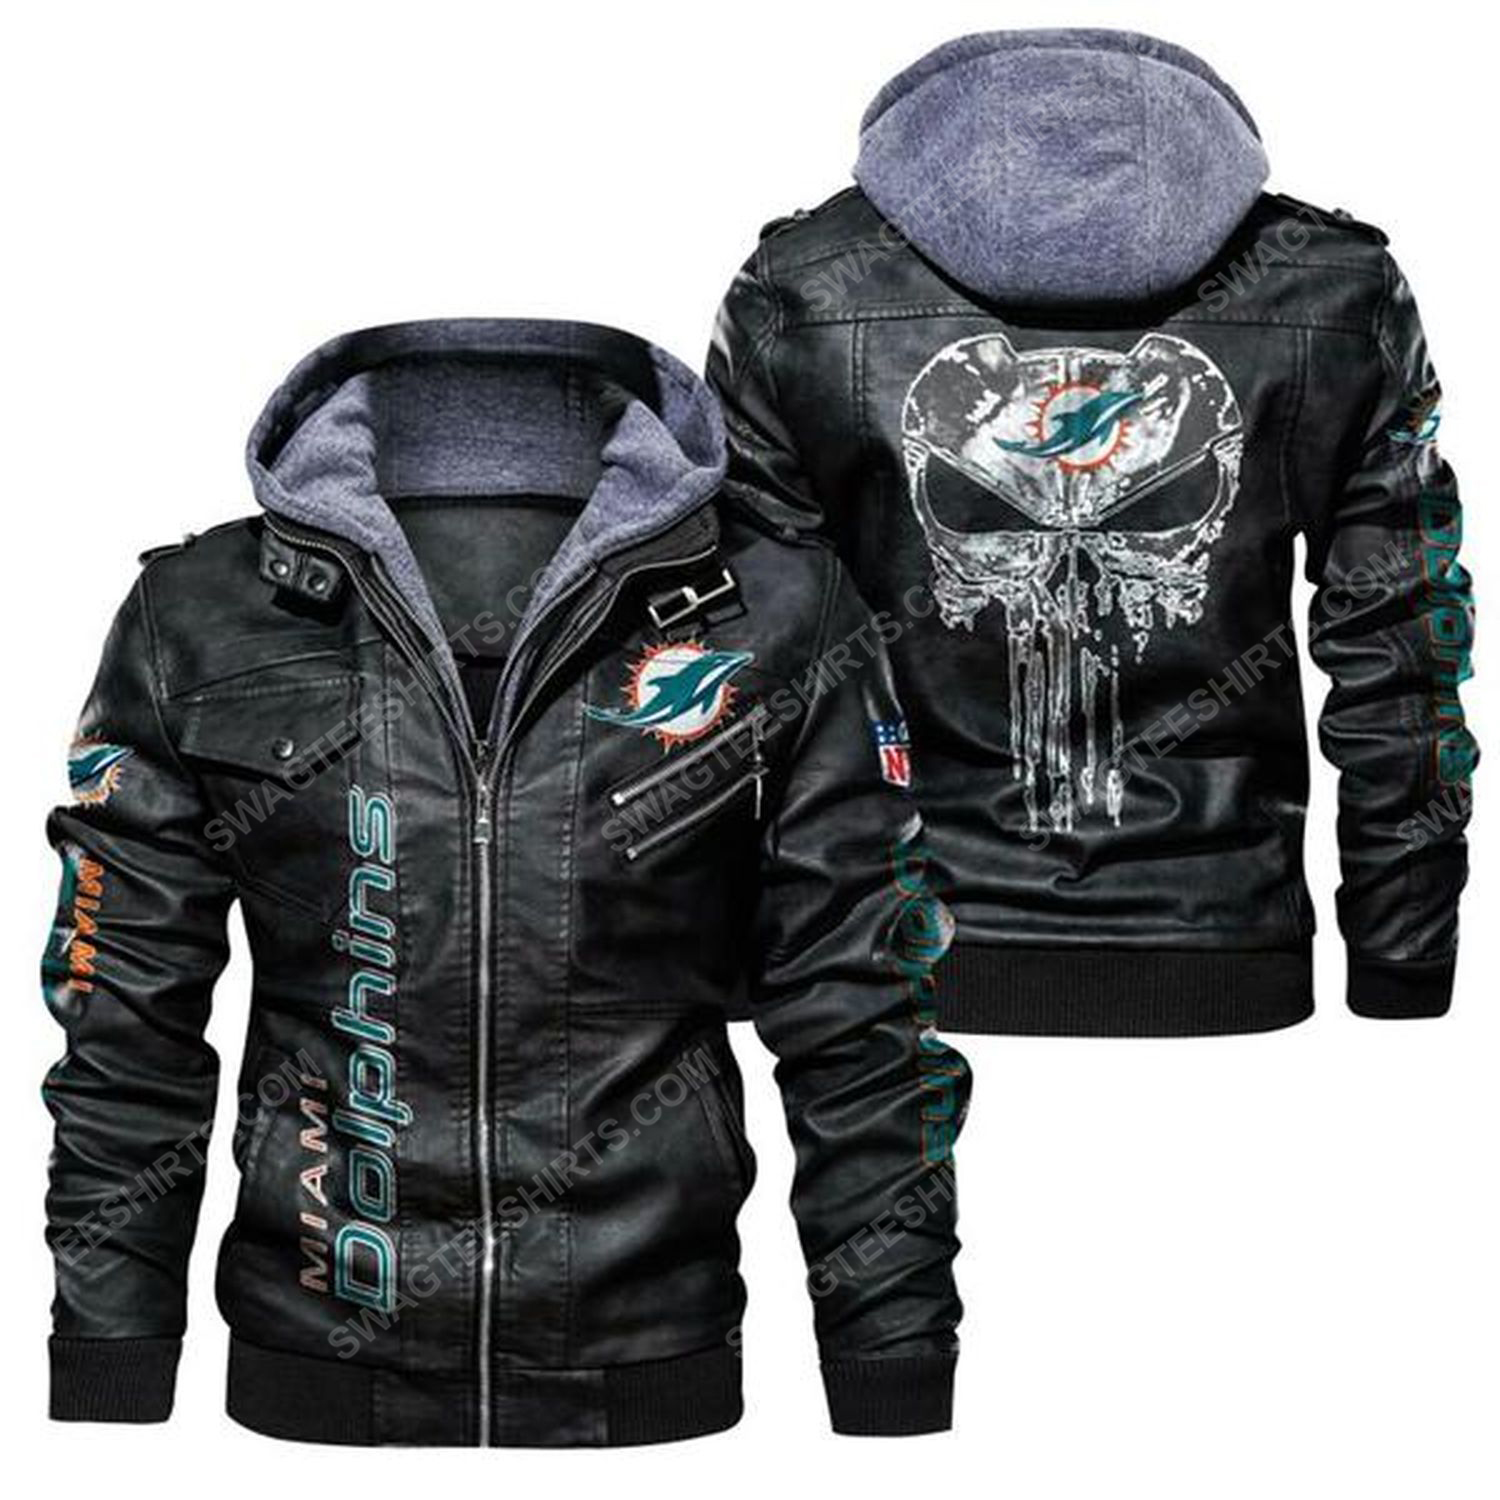 National football league miami dolphins leather jacket - black